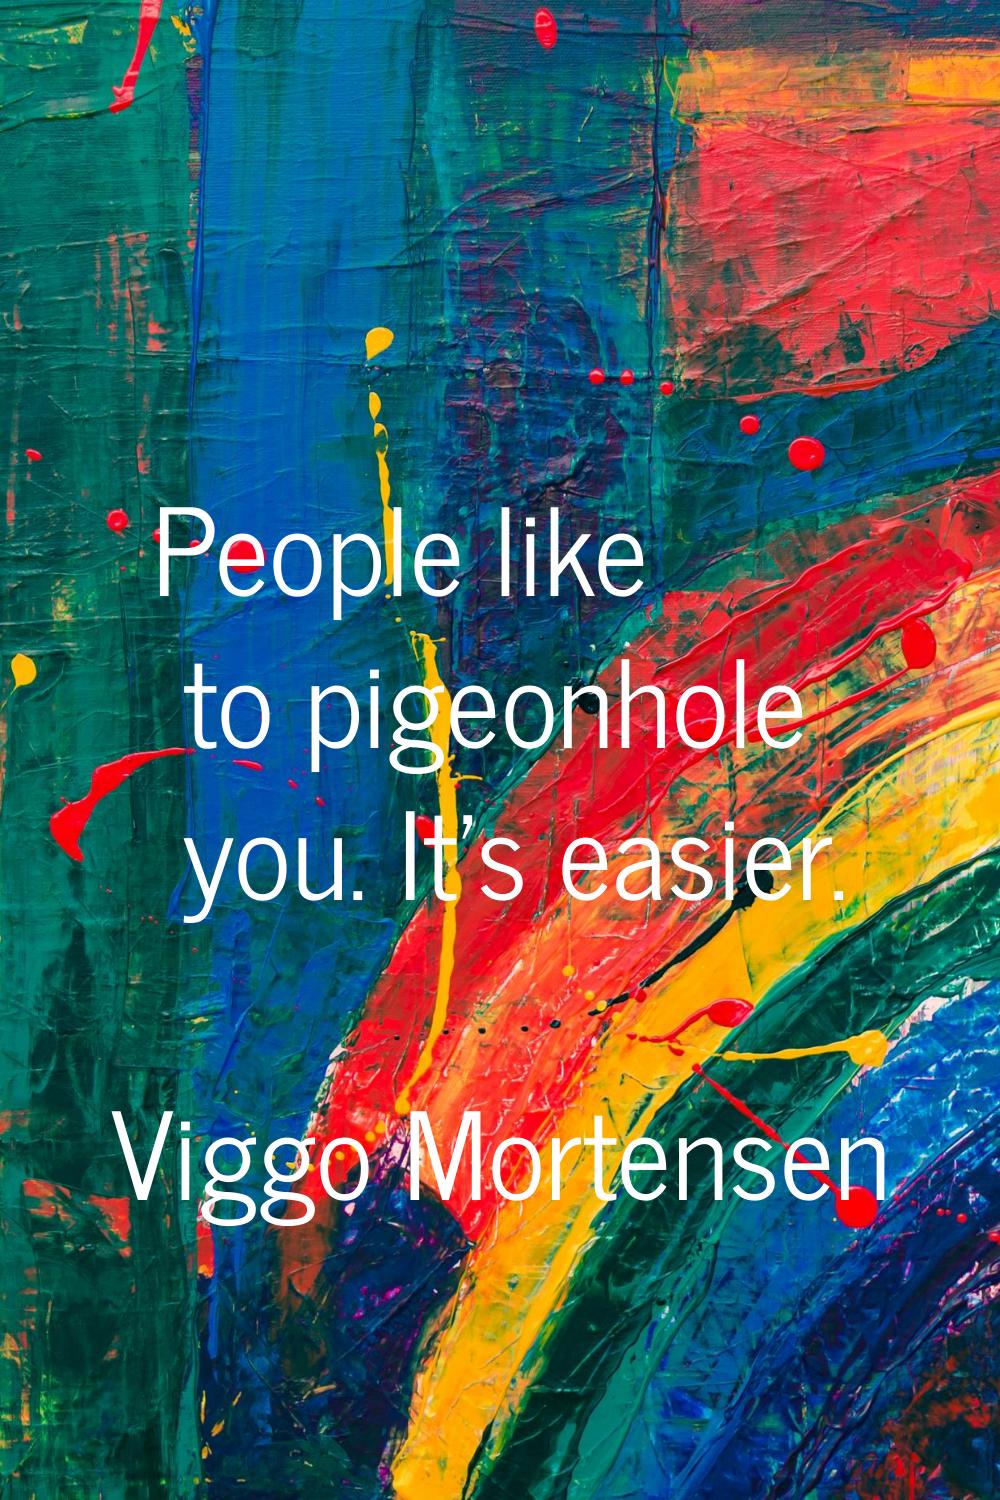 People like to pigeonhole you. It's easier.